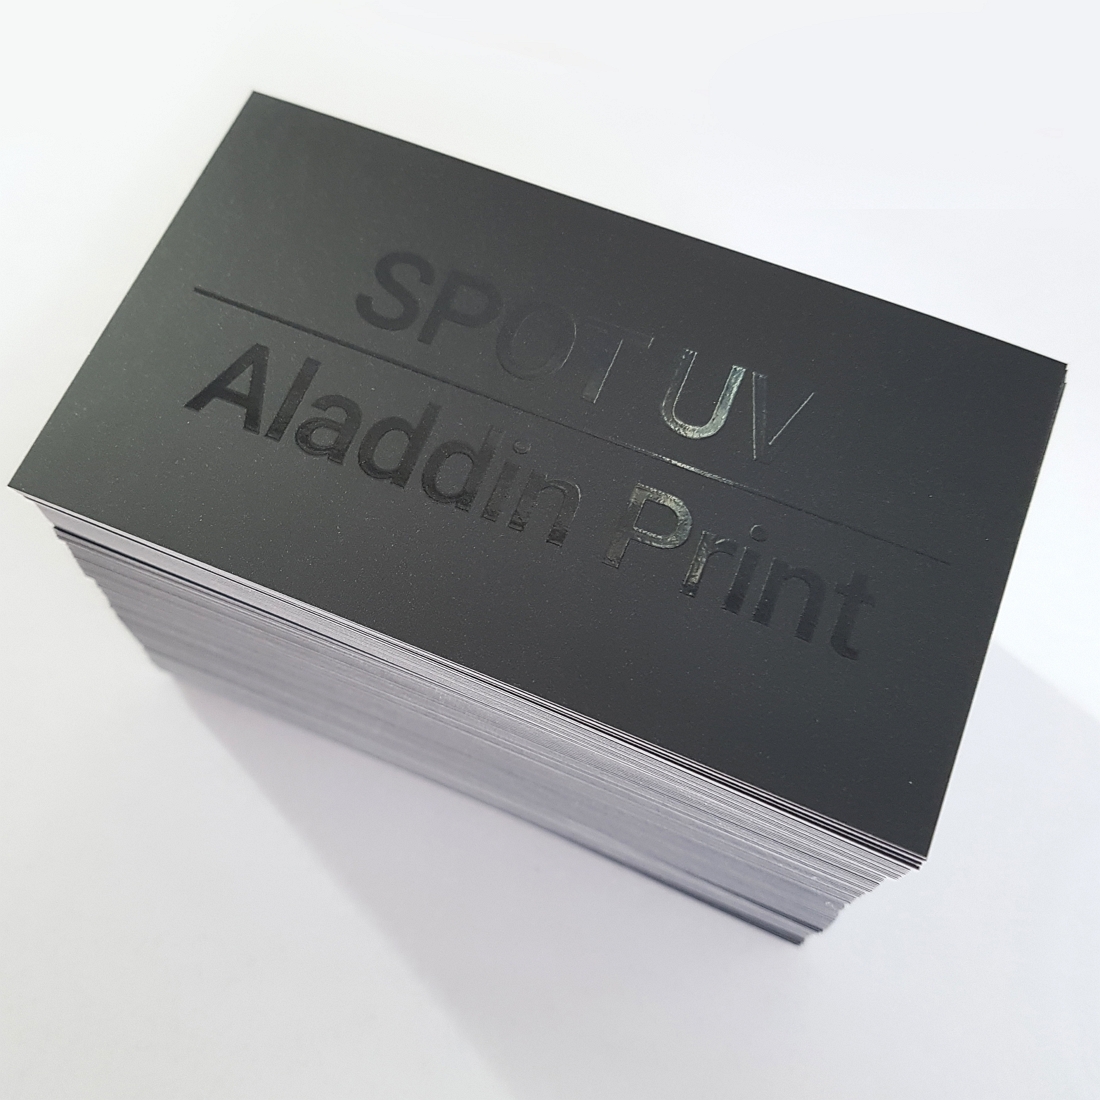 Download Spot Uv Business Cards Foil Business Cards Aladdinprint Com